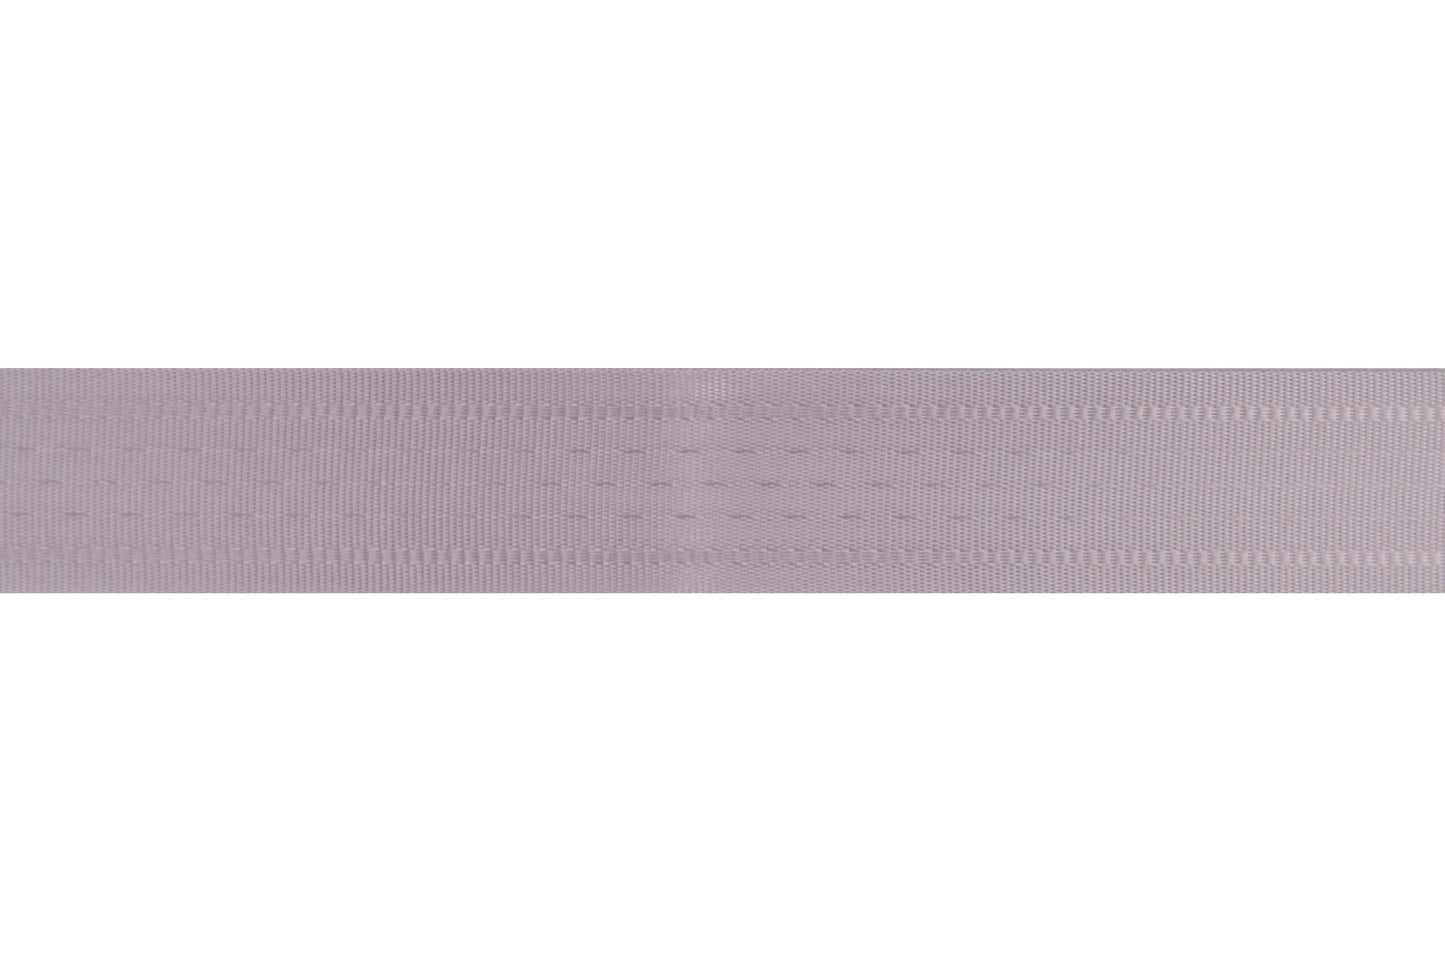 Seam Binding: 2.5m x 25mm: Grey